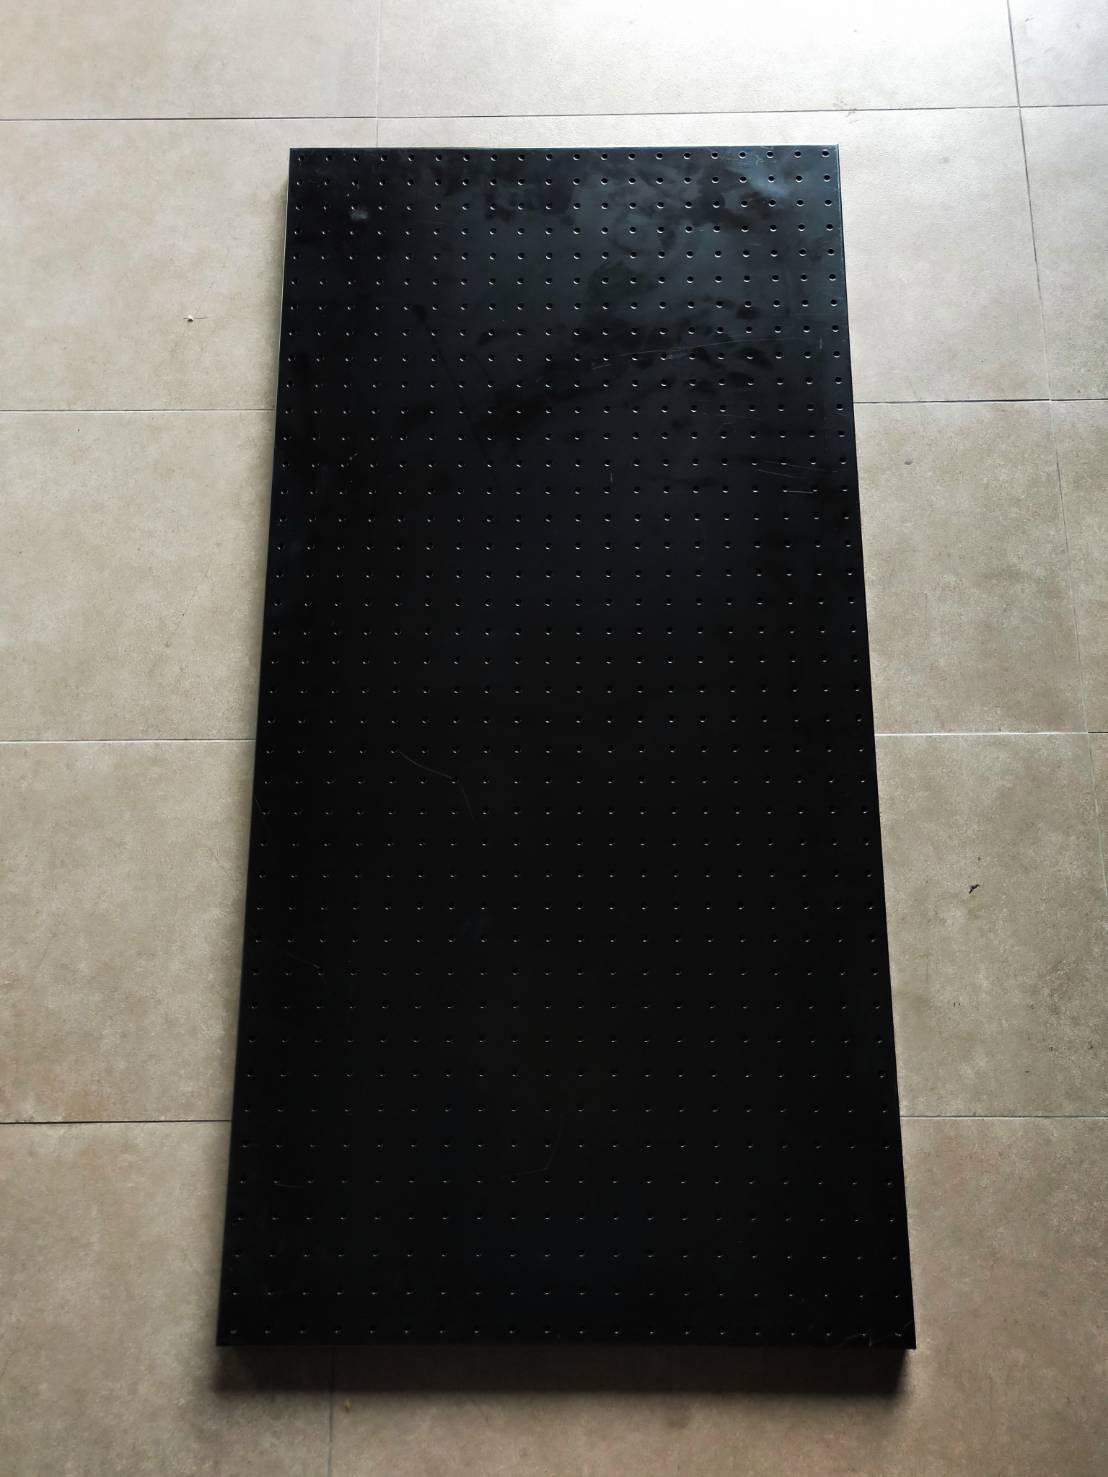 Pegboard Hook  แผ่นกระดานเพ็กบอร์ดแผงเหล็กเจาะรู แขวนอุปกรณ์ ขนาด 50x100cm. หนา 1.2 mm. พับขอบสูง 23mm. ช่องรู 5 mm. สีดำ(White Color) x จำนวน 1 แผ่น